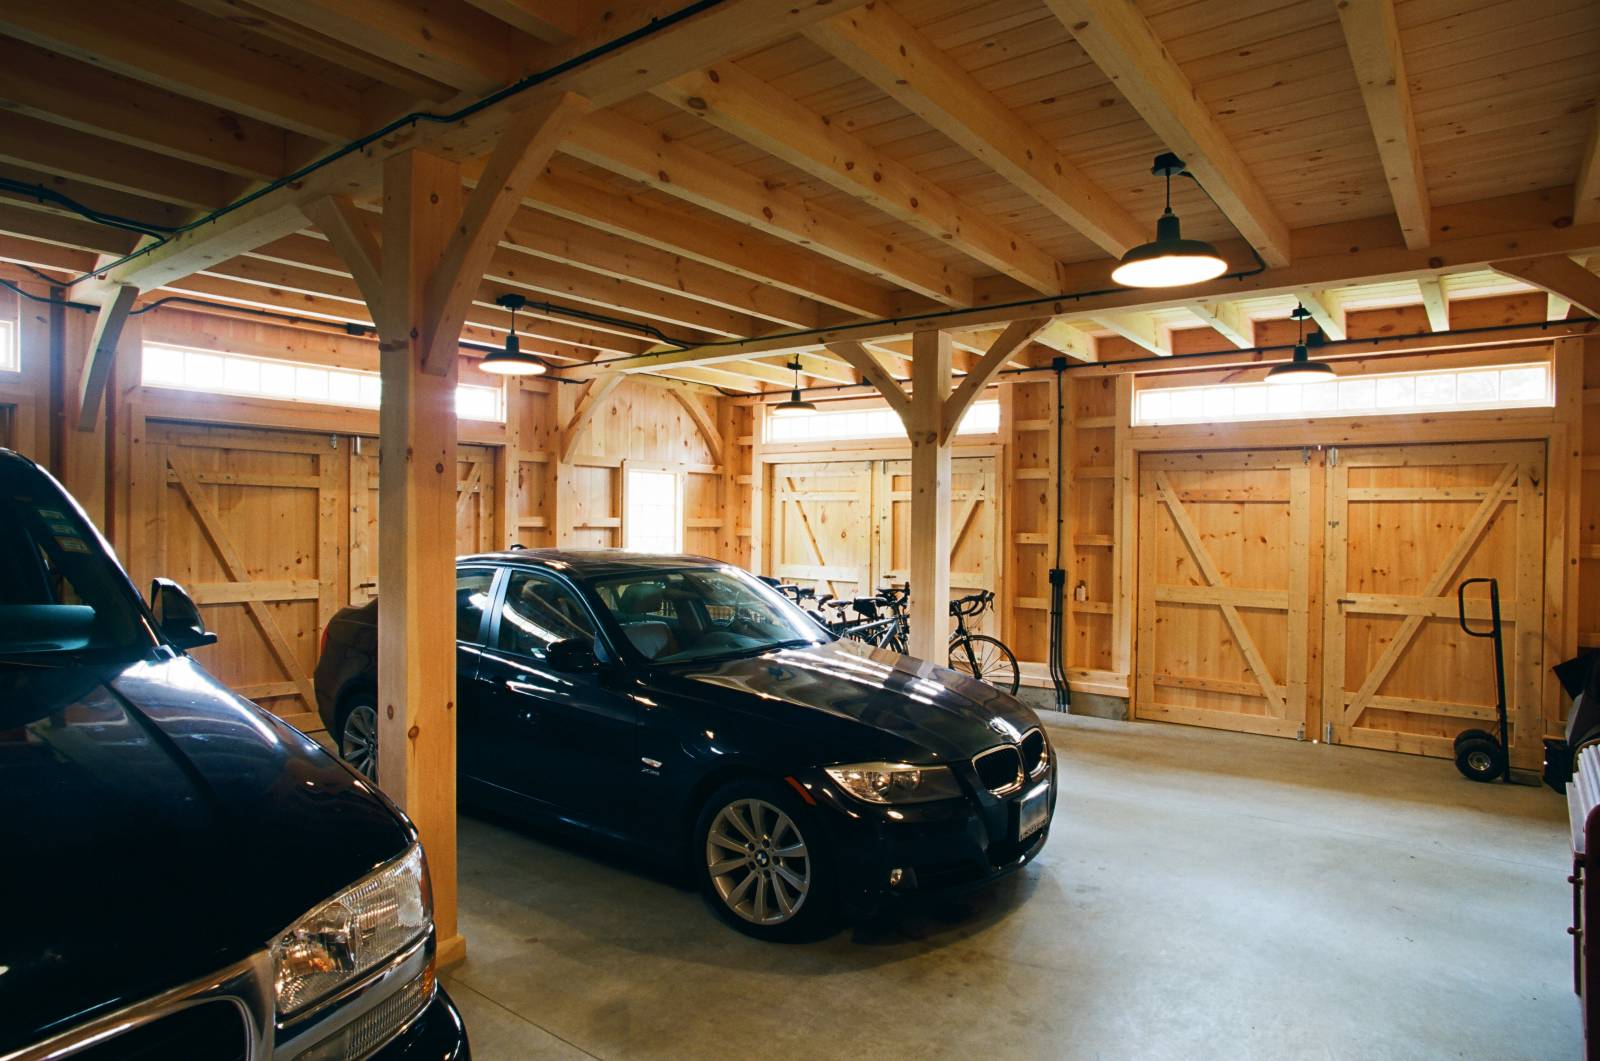 This post & beam barn interior has a 2-car garage